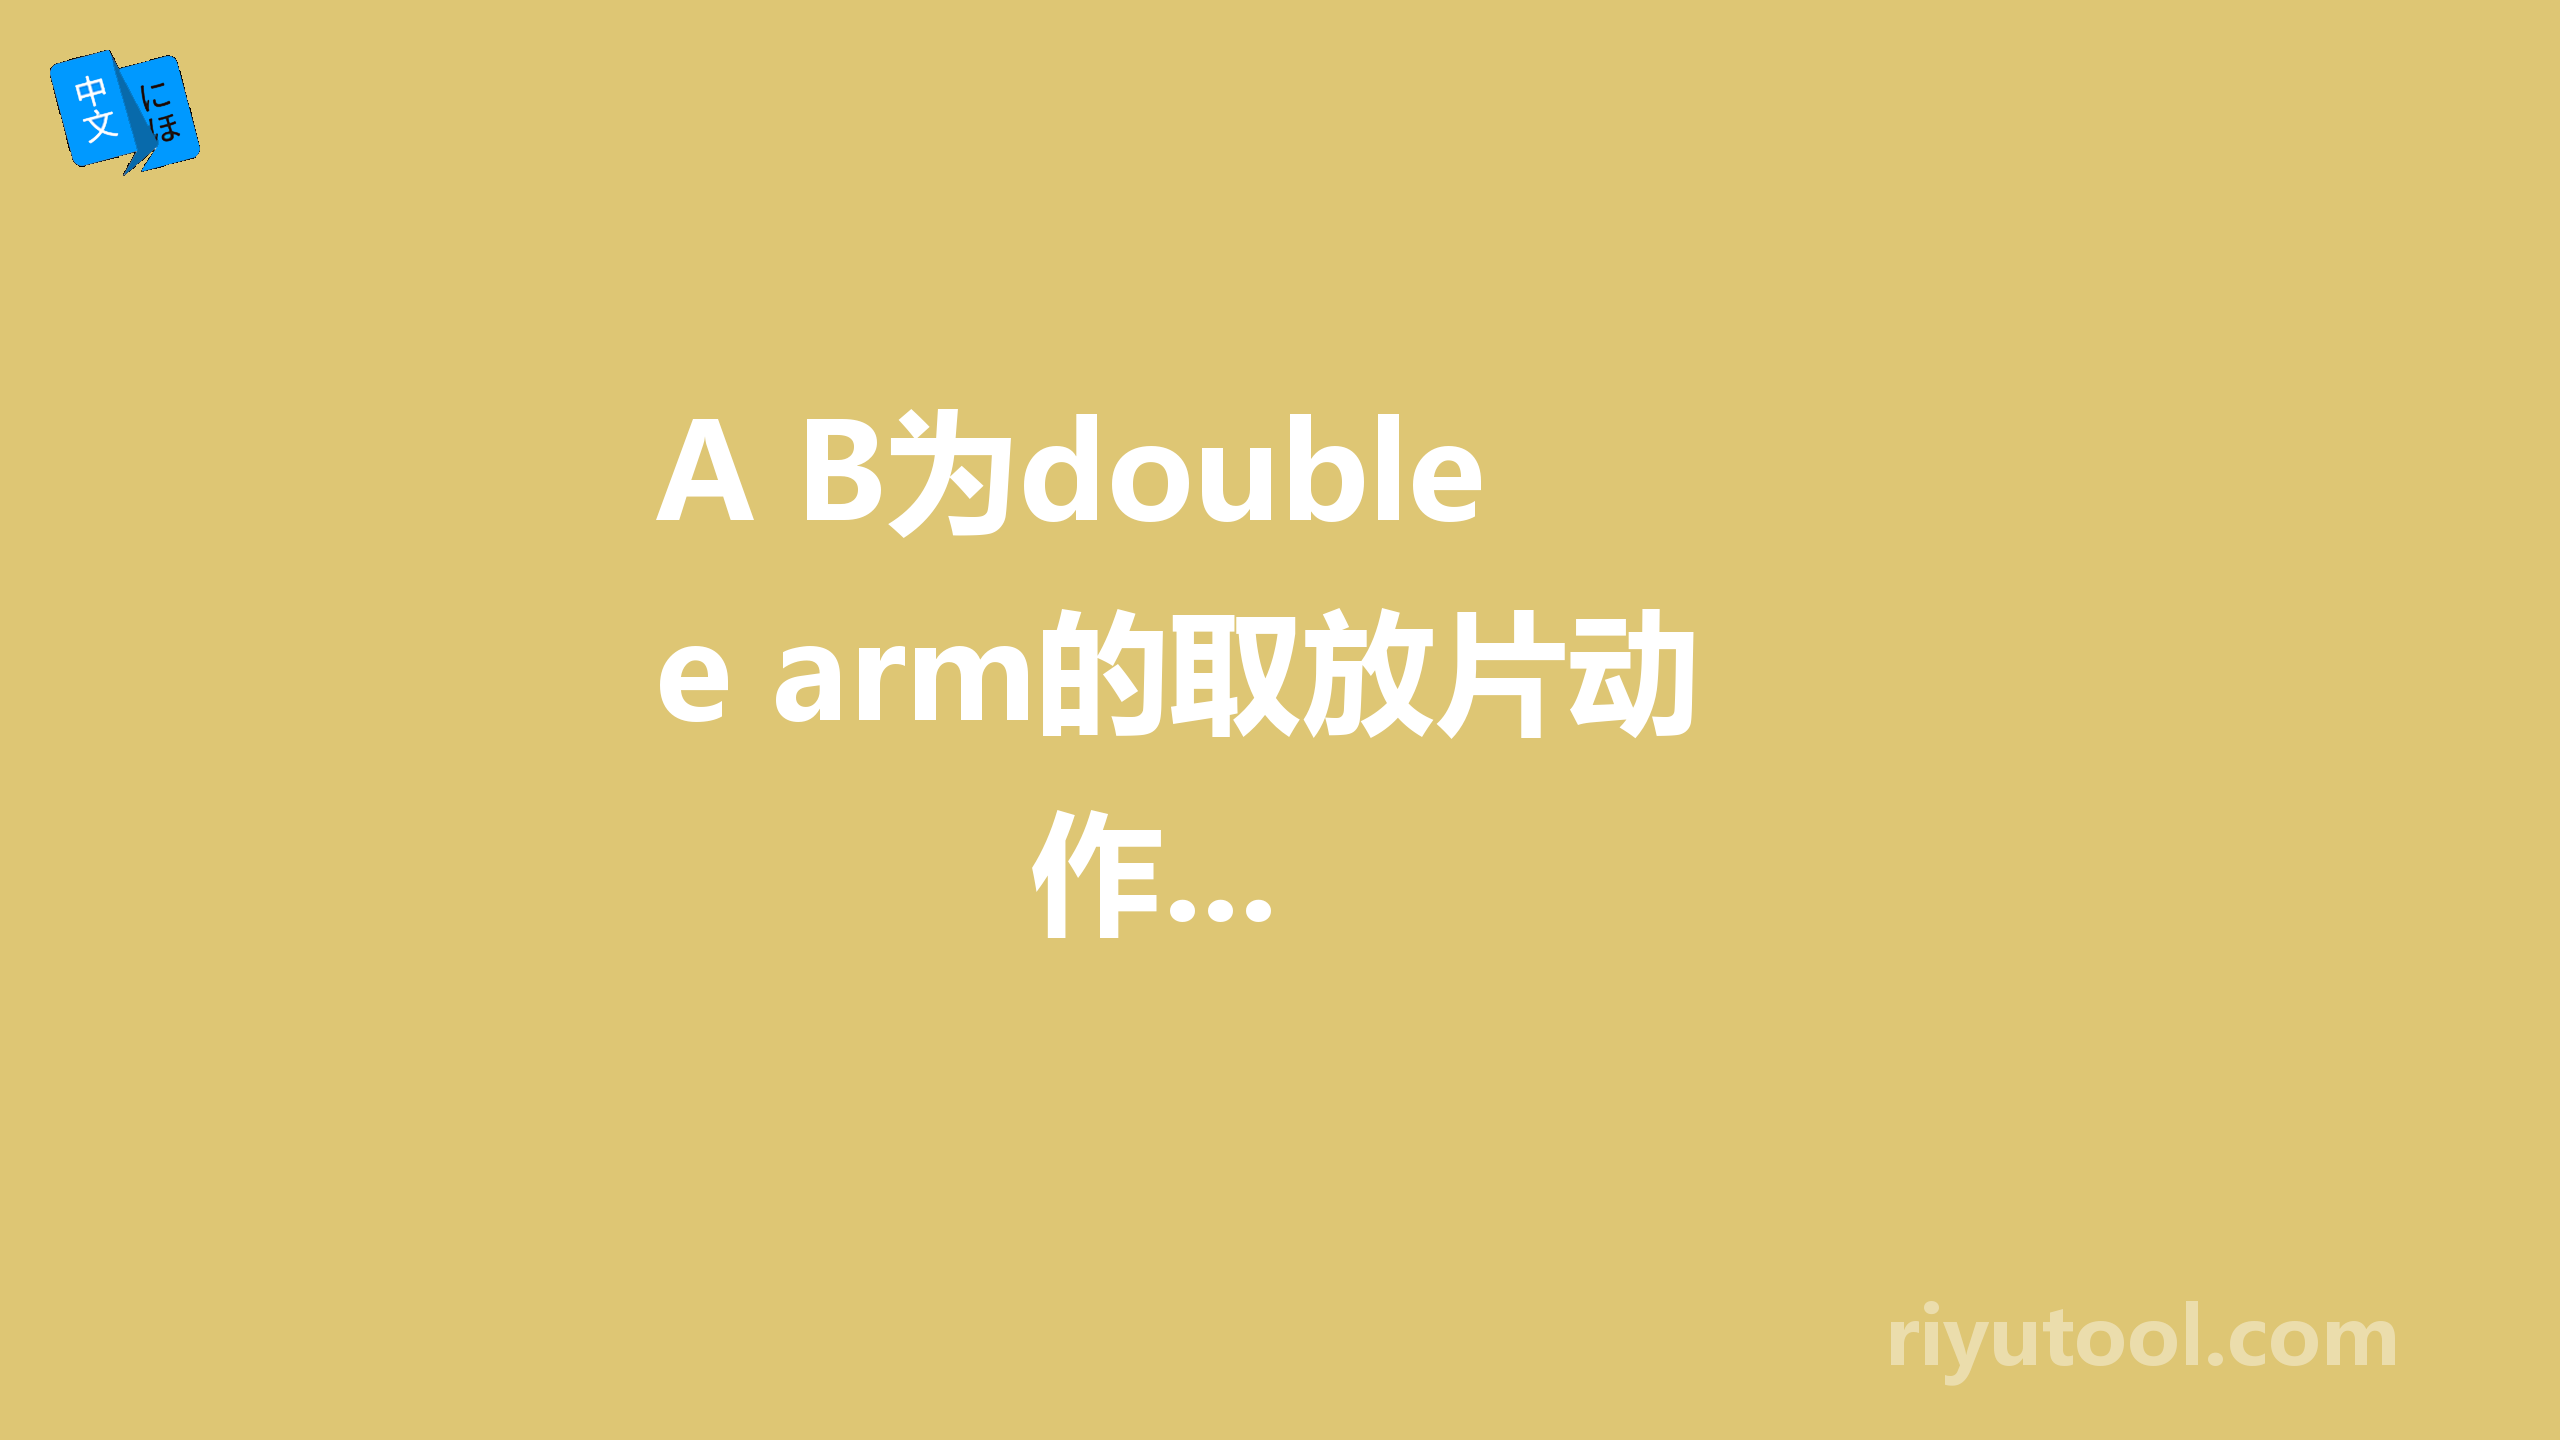 A B为double arm的取放片动作...